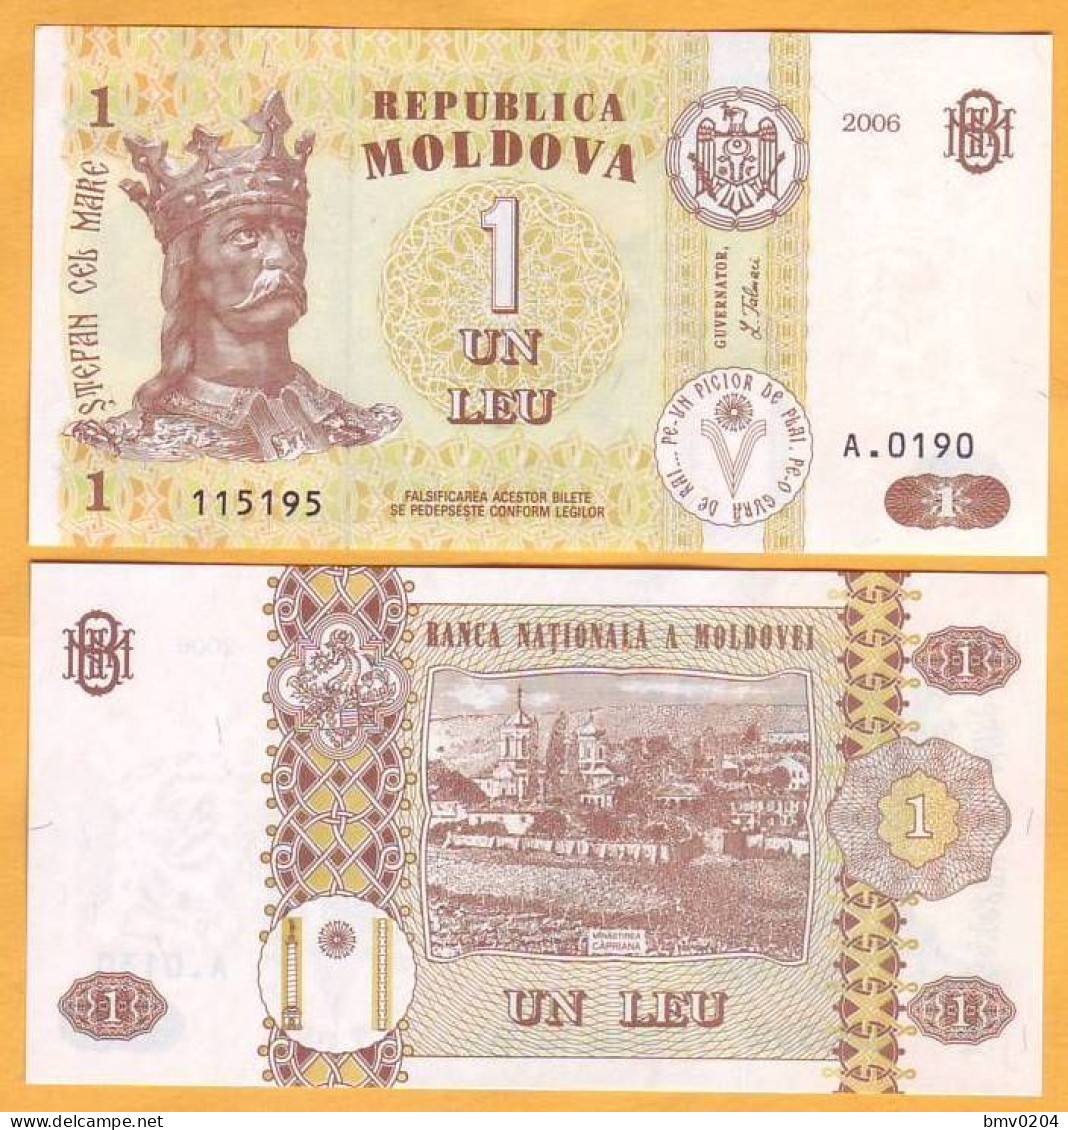 Moldova Moldavie  5 Banknotes  "1 LEI  2006", UNC  One Set Of 5 1 Leu Banknotes. - Moldavië